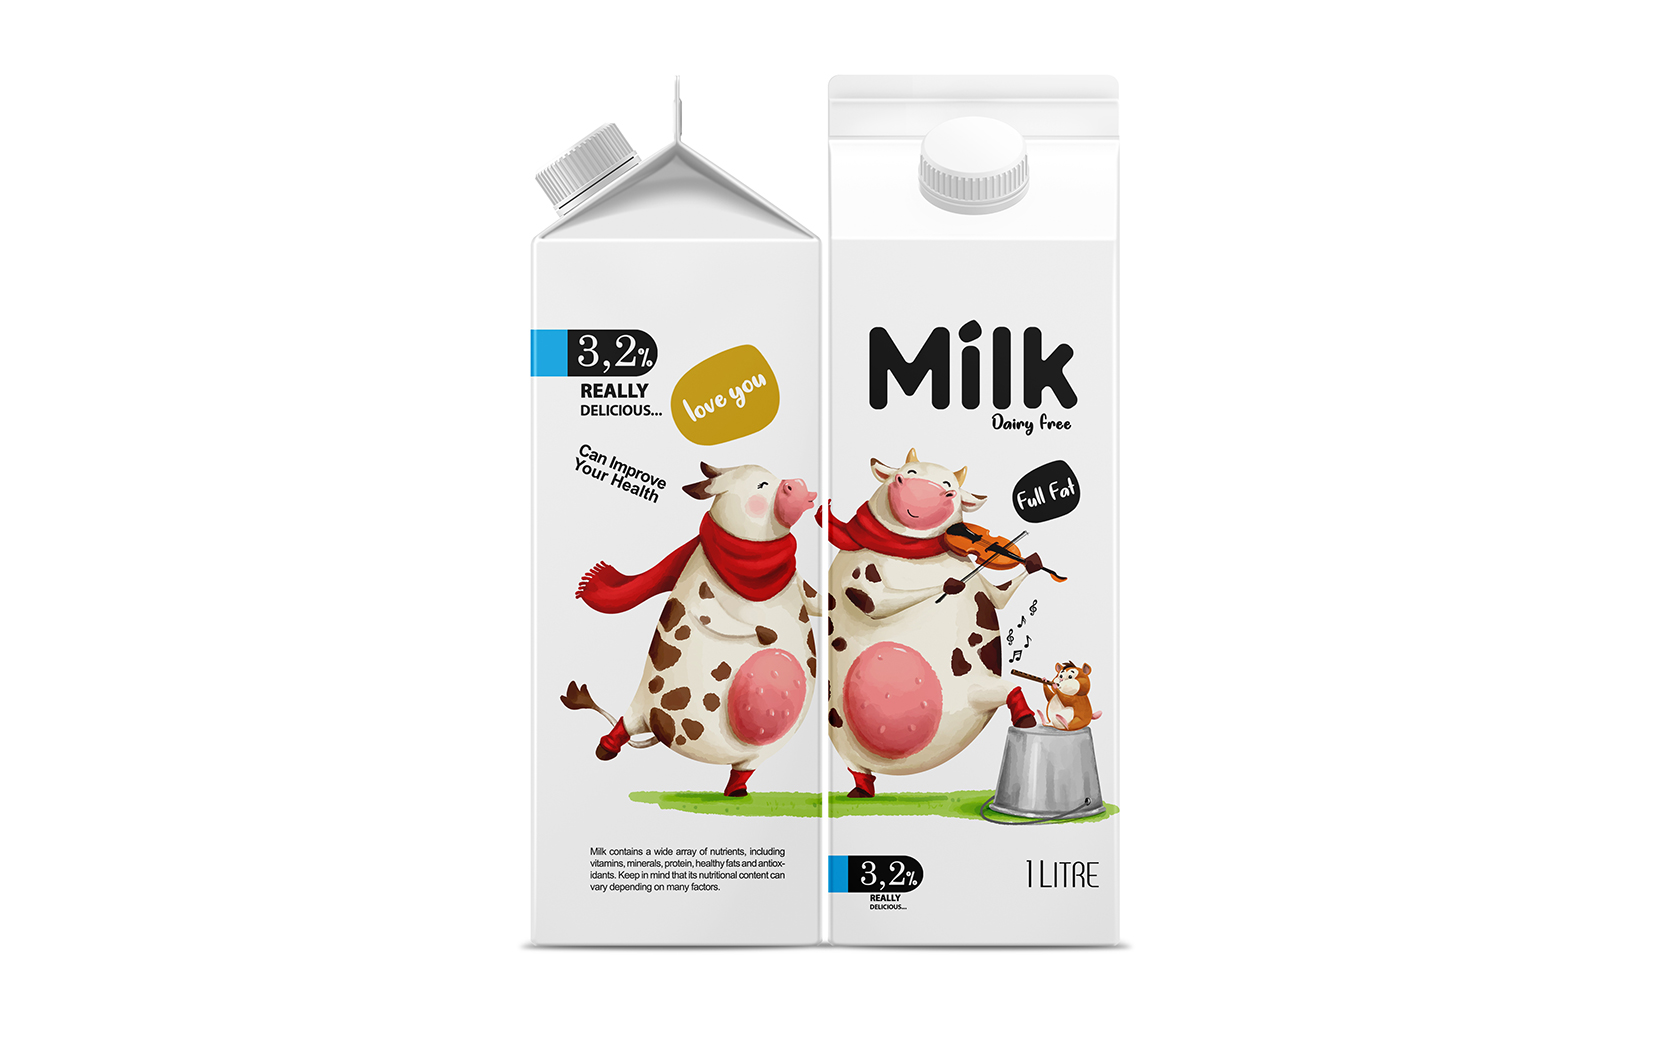 Taha Fakouri Creates New Milk Packaging Design Concept